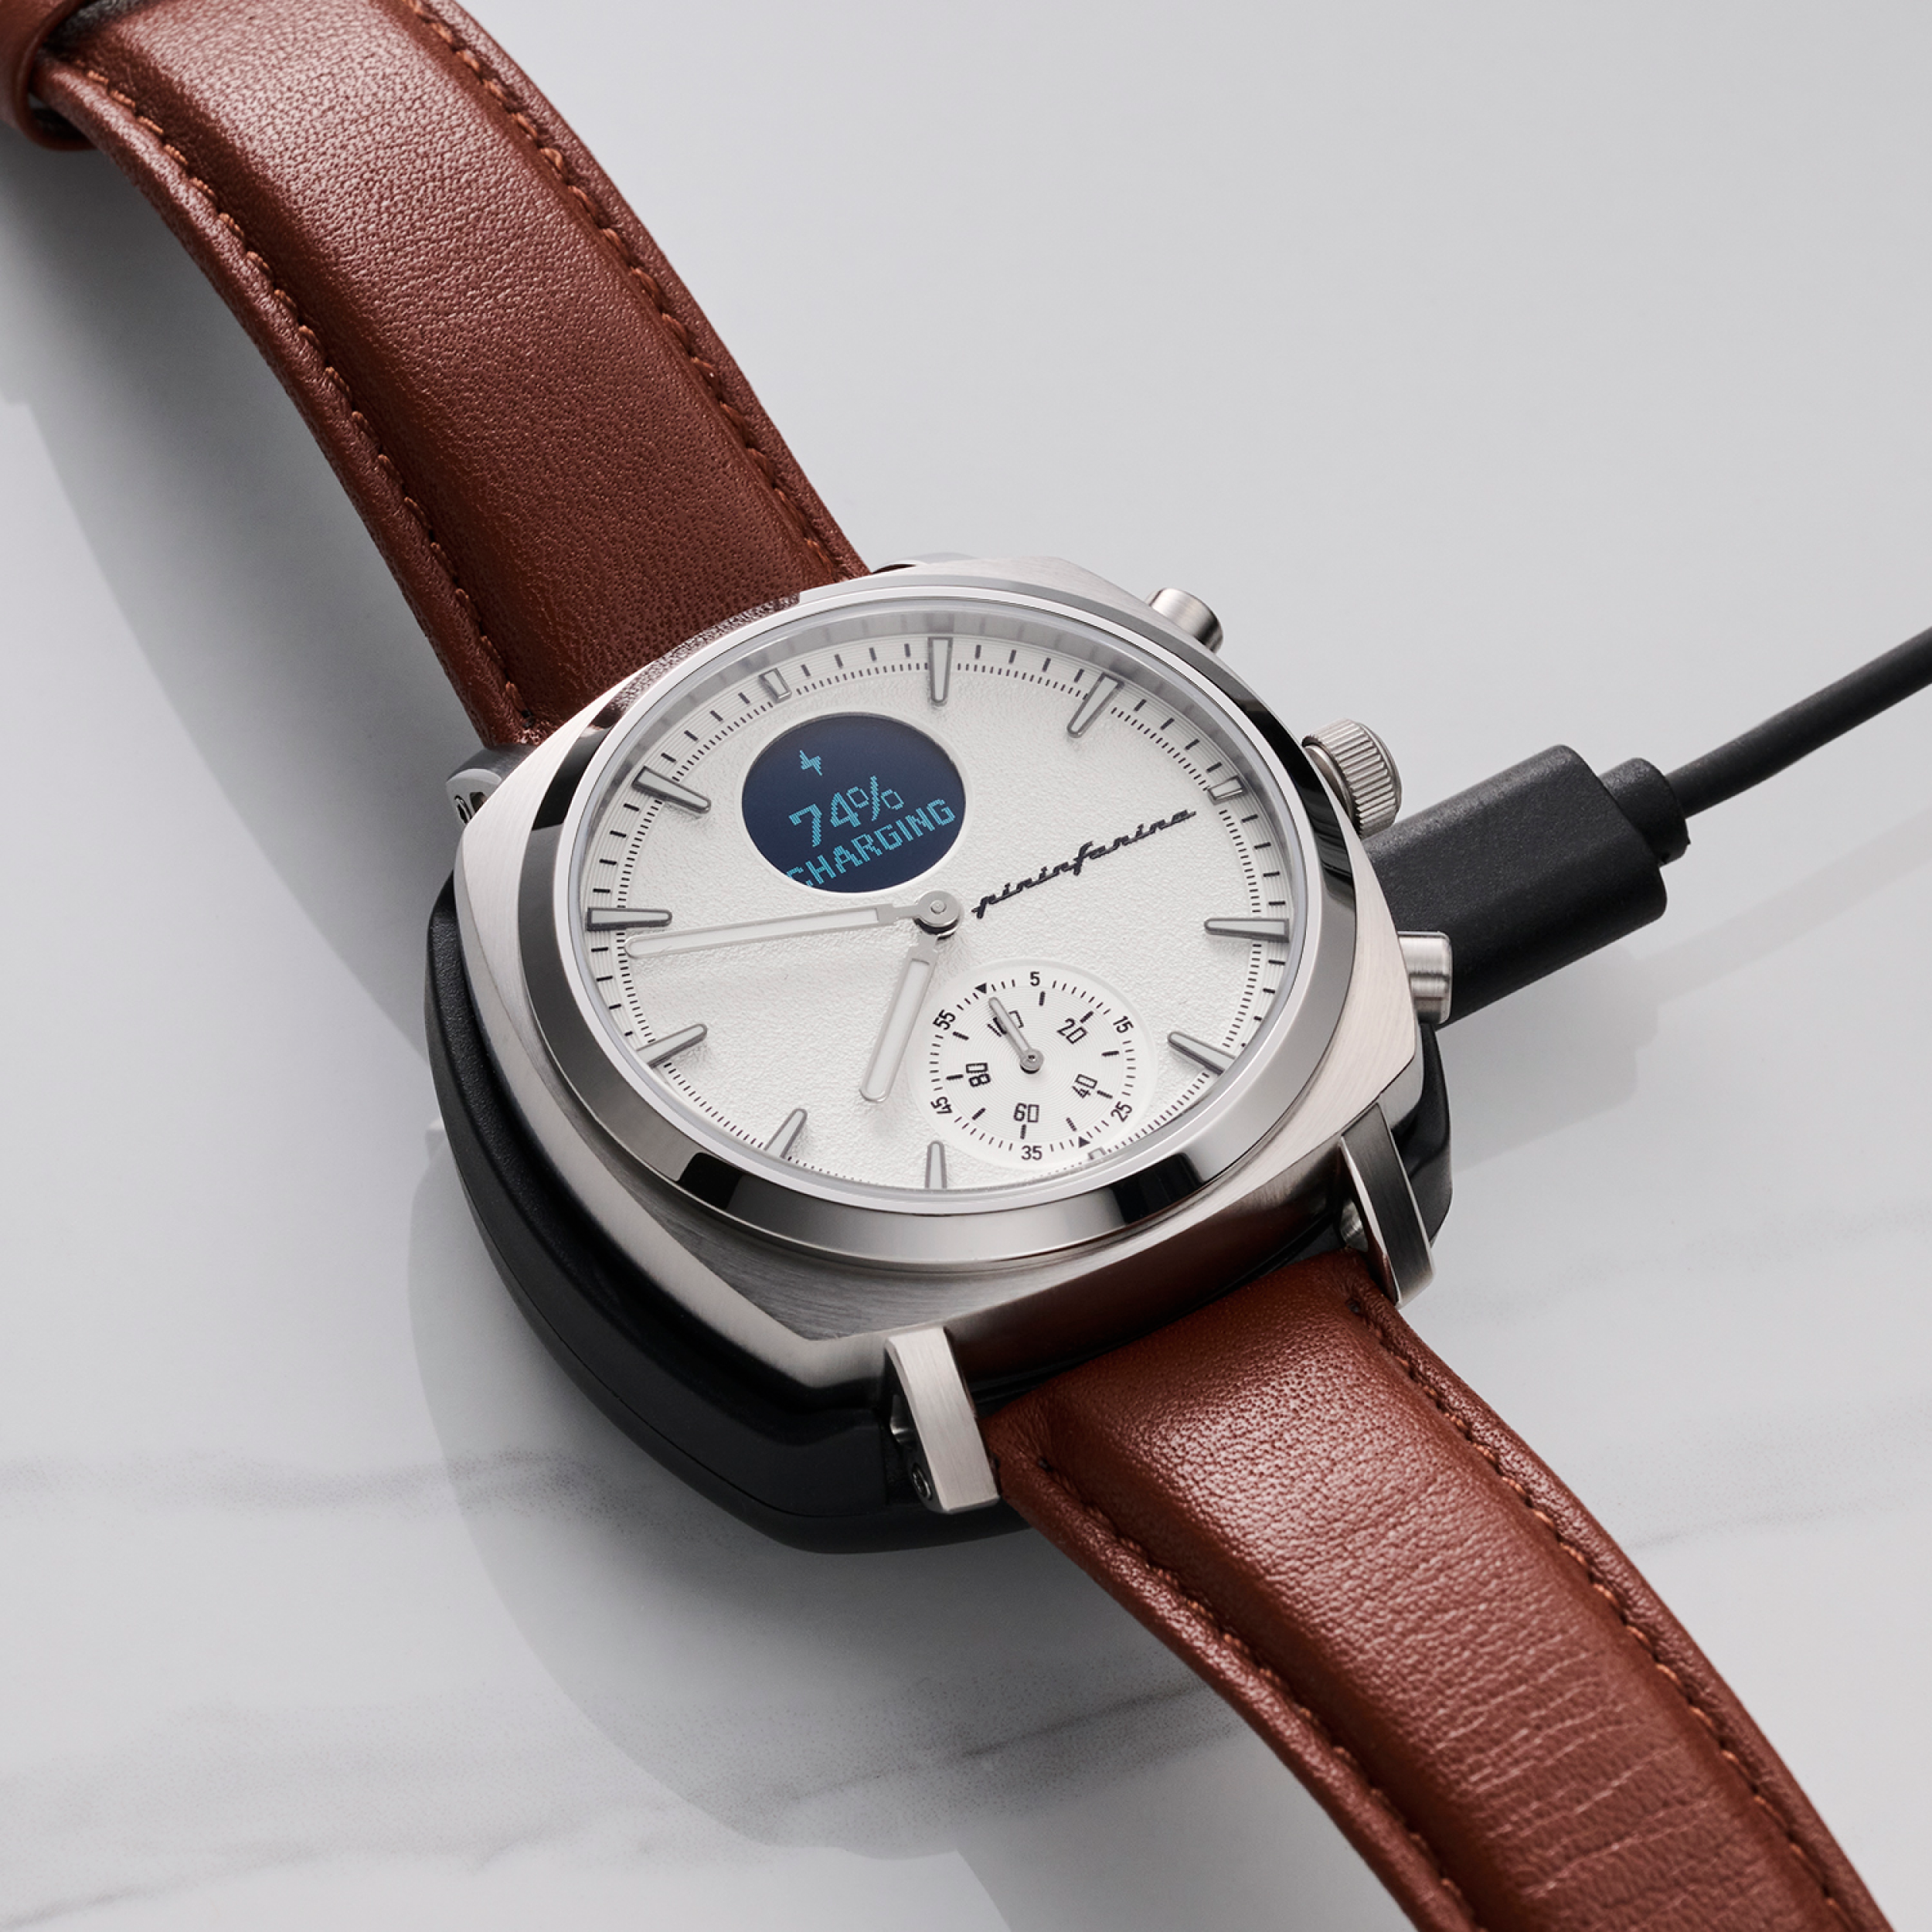 Smartwatch Genuine mit Senso Analoge Hybrid PININFARINA digitalem Display leather, – Steel